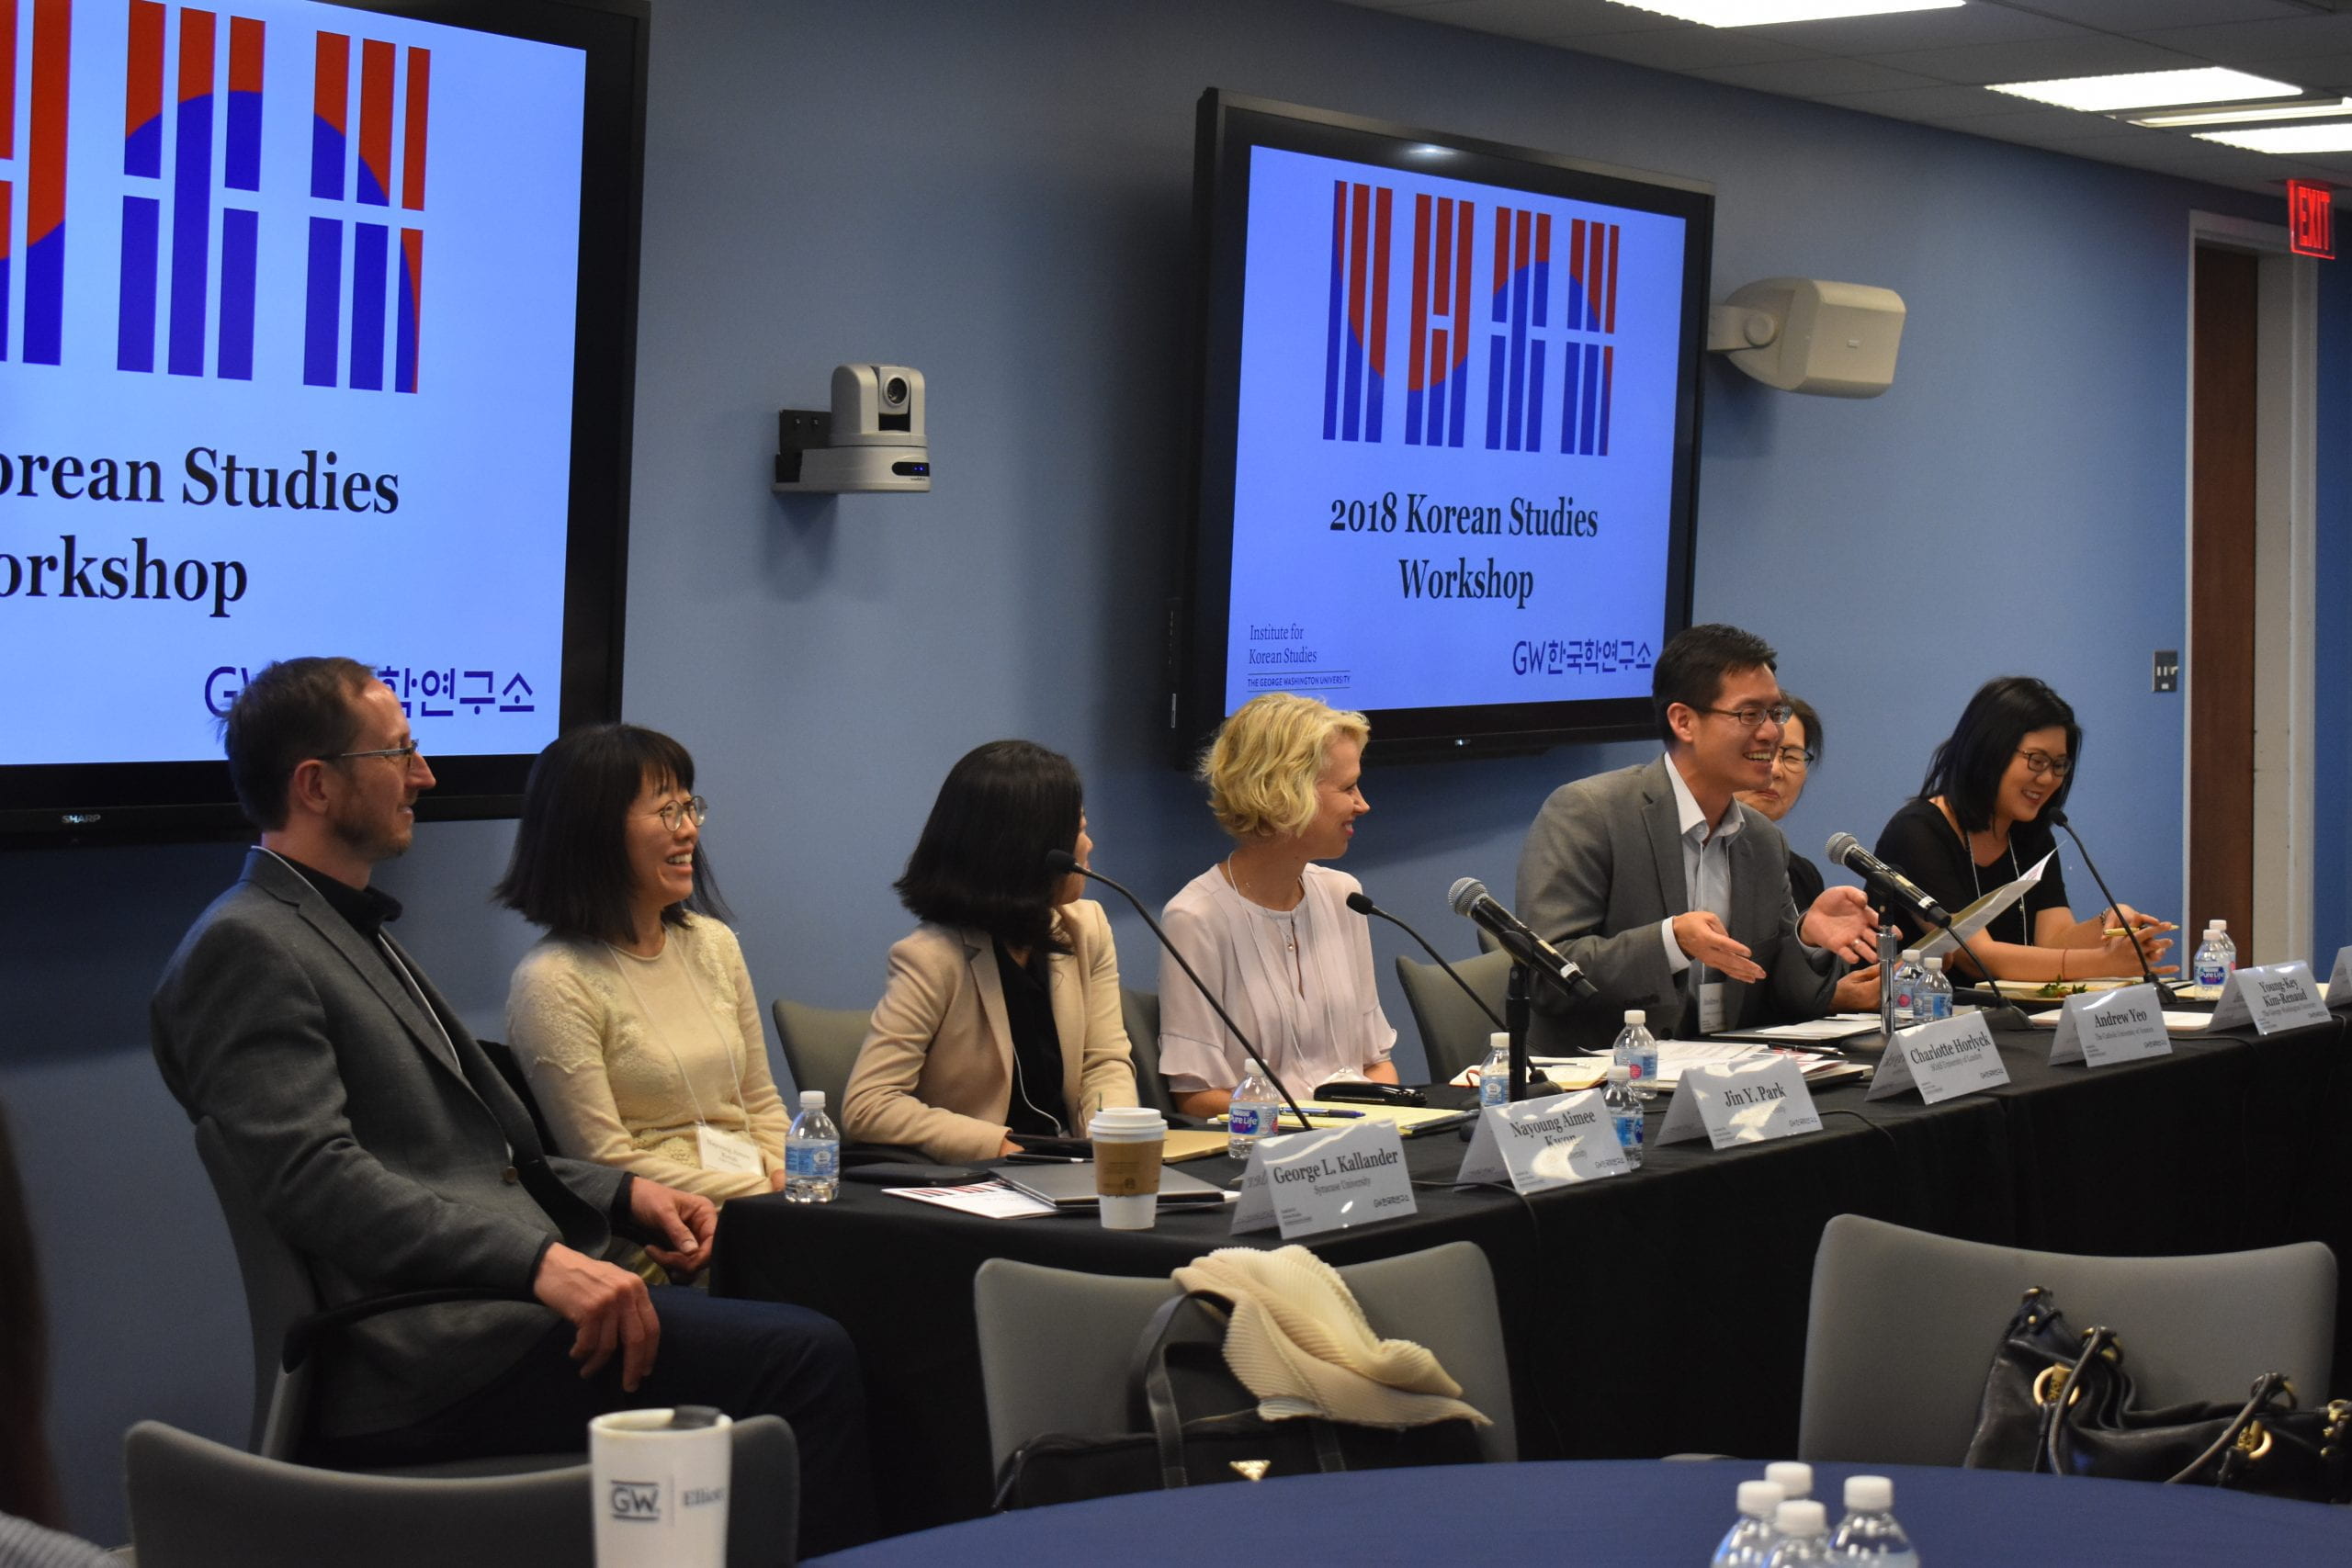 panelists sit around panelists table at the 2018 GWIKS Korean Studies Workshop